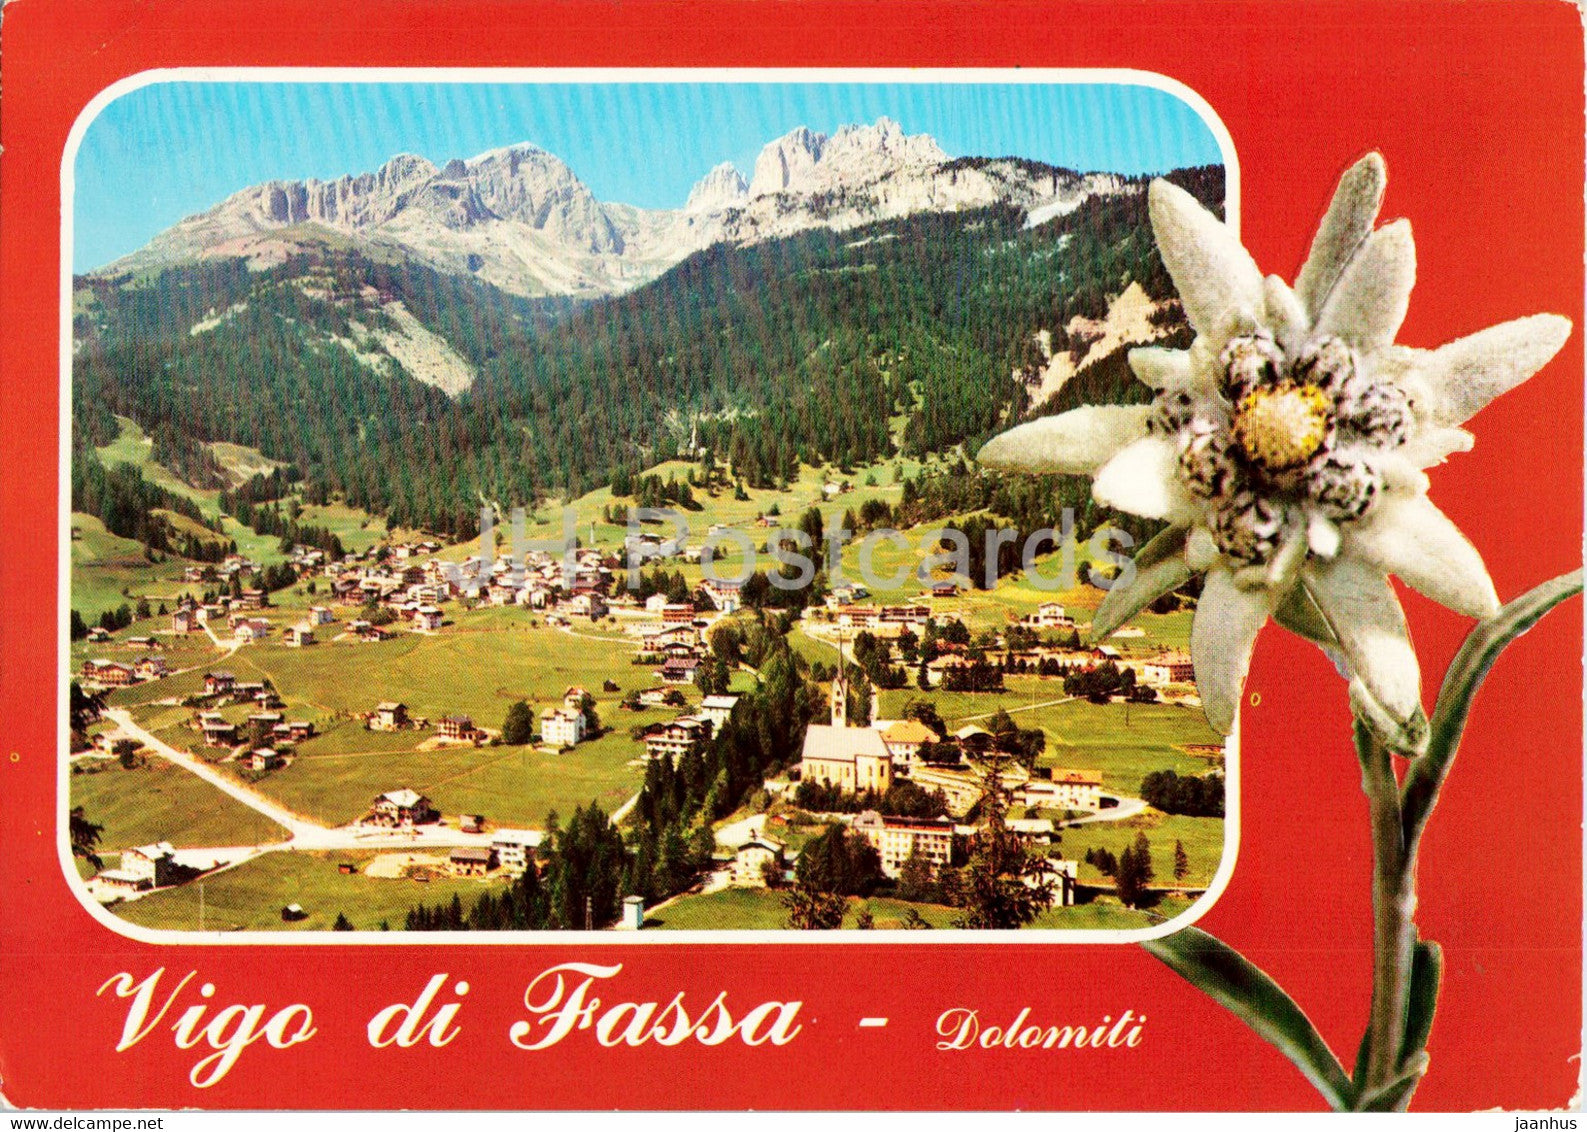 Vigo di Fassa - Dolomiti - flowers - Edelweiss - 1975 - Italy - used - JH Postcards